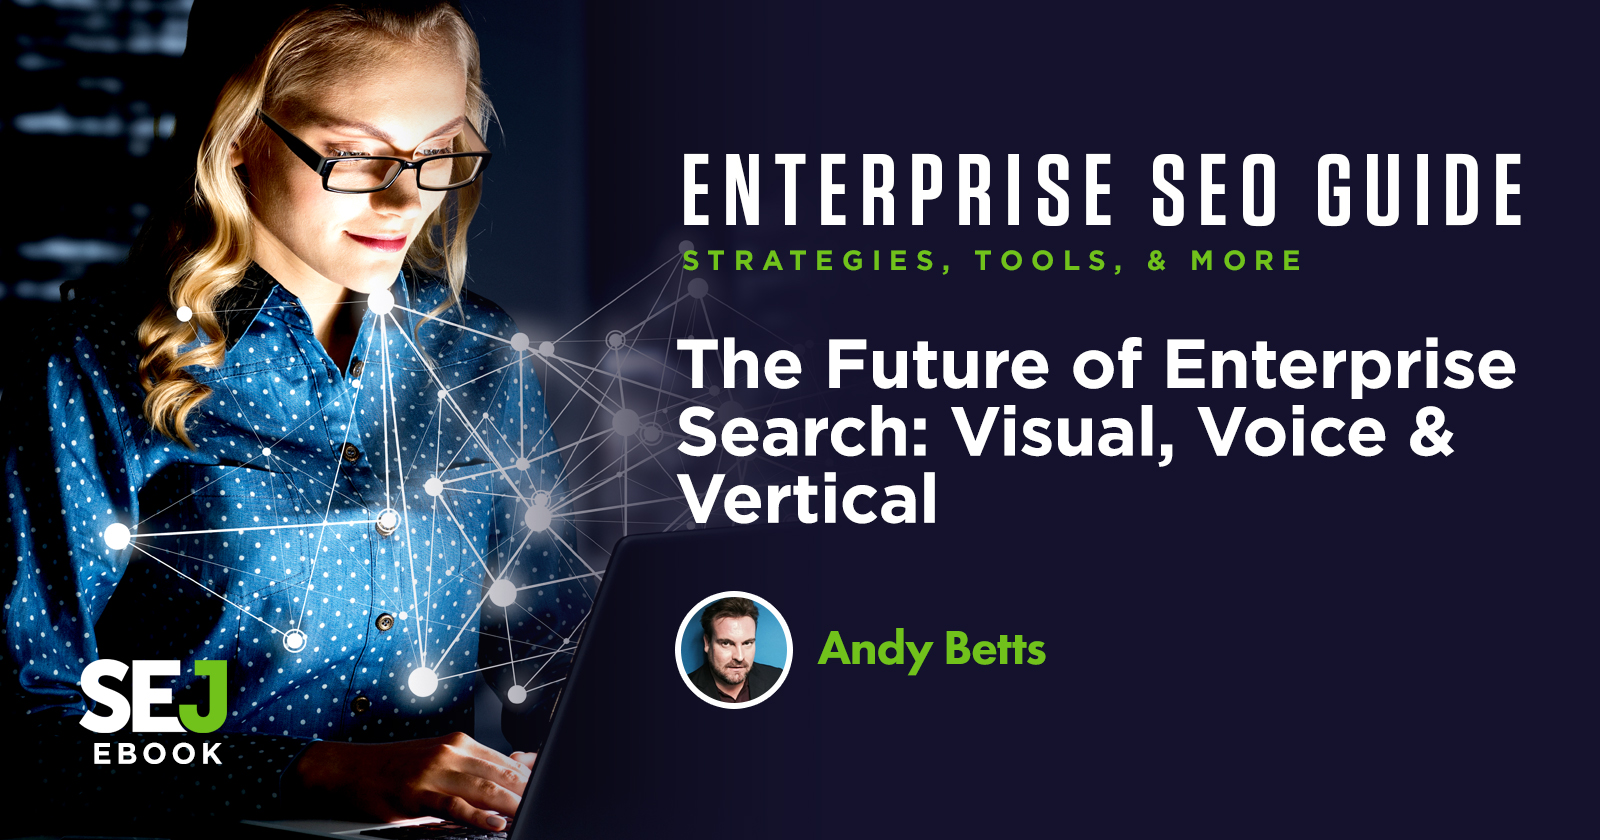 The Future of Enterprise Search: Visual, Voice & Vertical